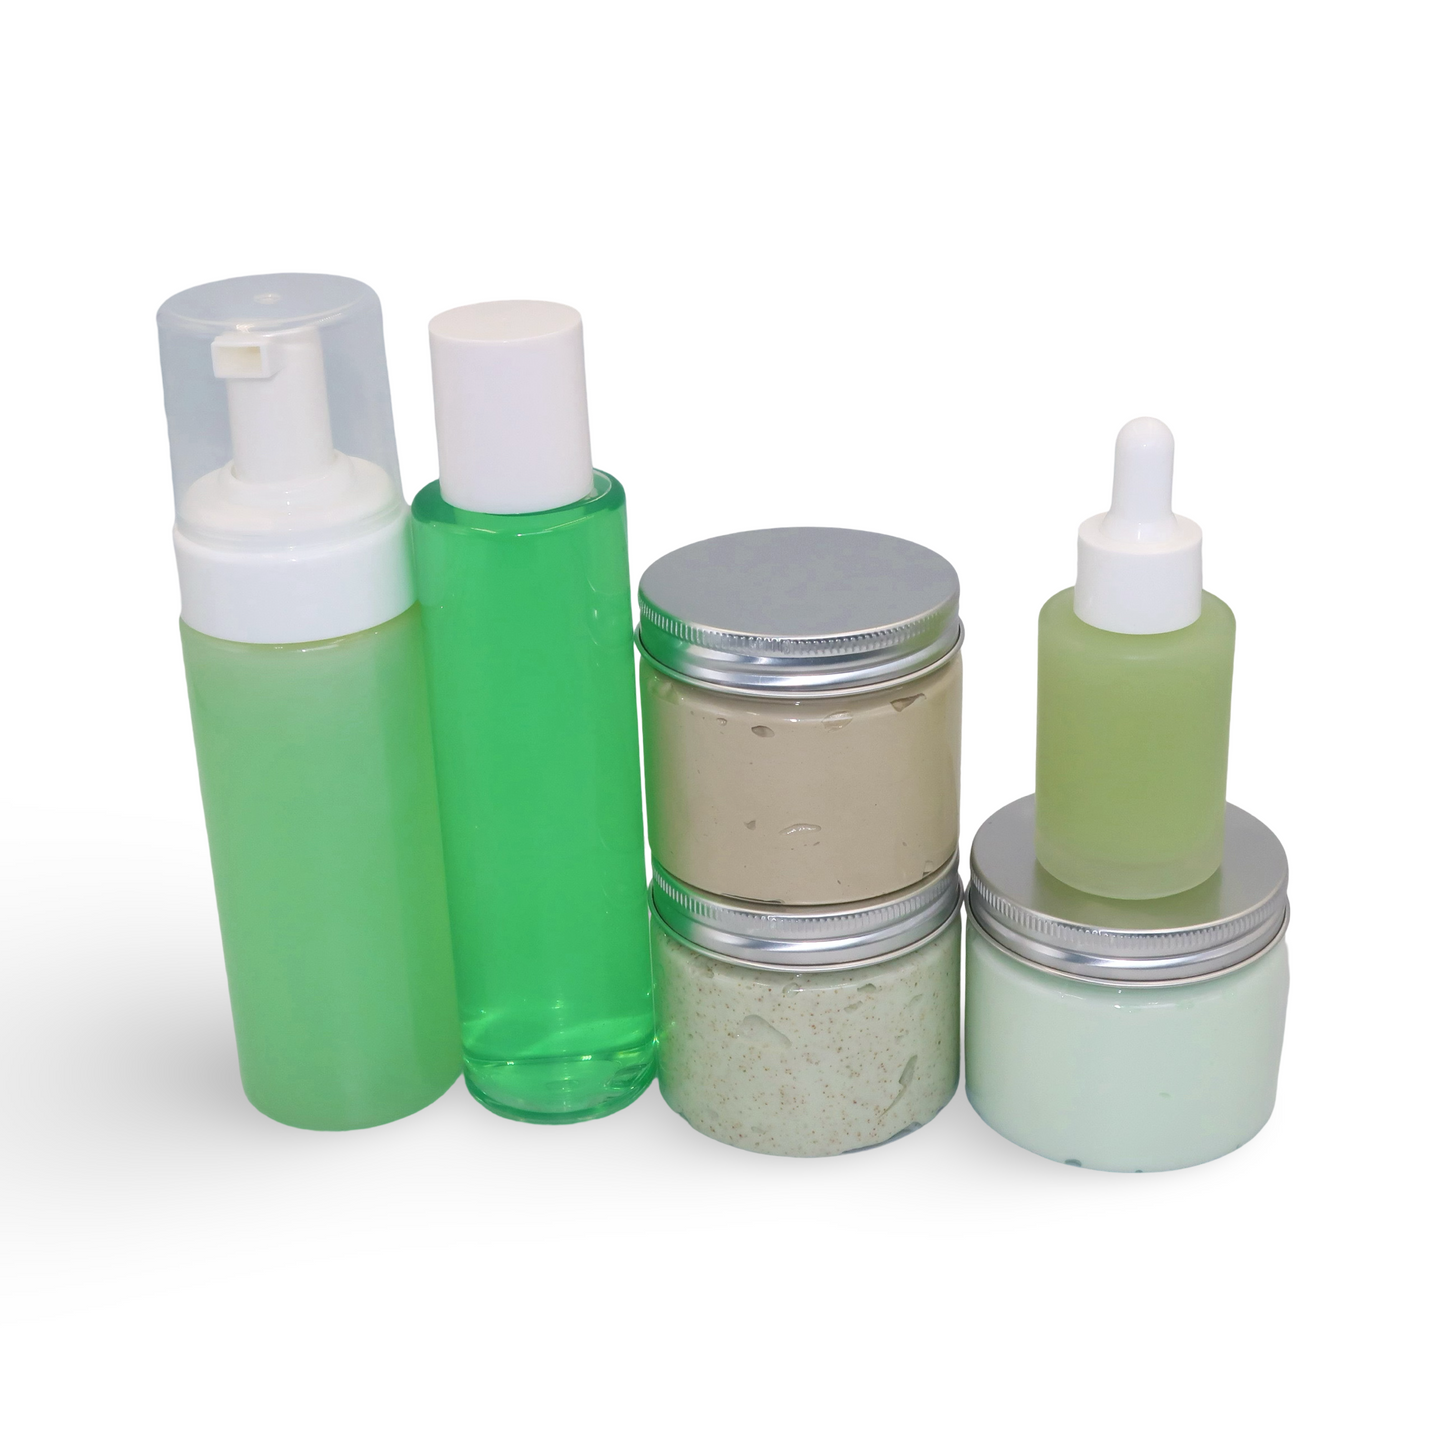 Healing skincare range with moringa, hemp oil for sensitive skin - sample kit